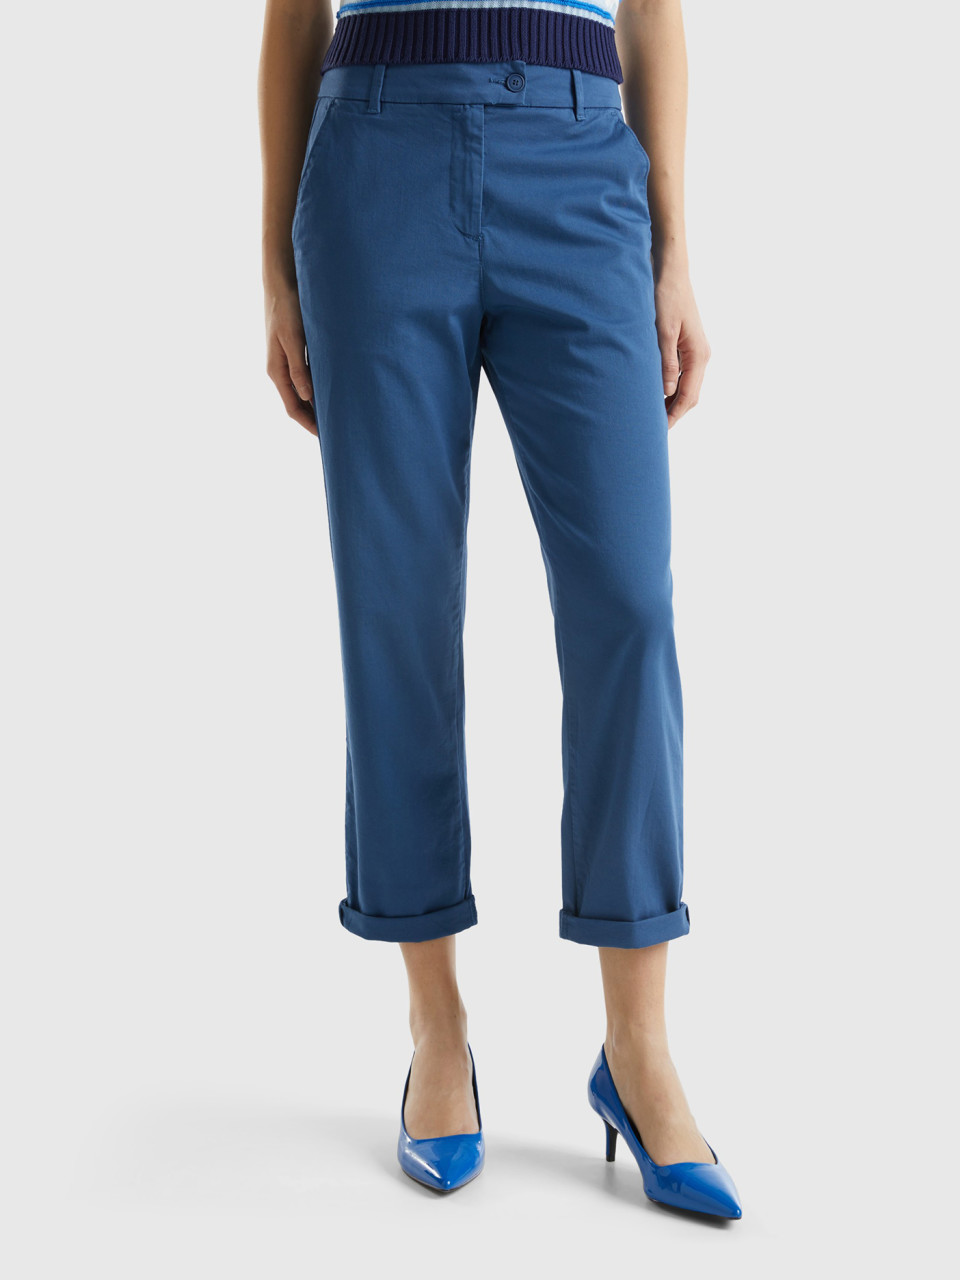 Benetton, Pantalones Chinos De Algodón Elástico, Azul Grisáceo, Mujer